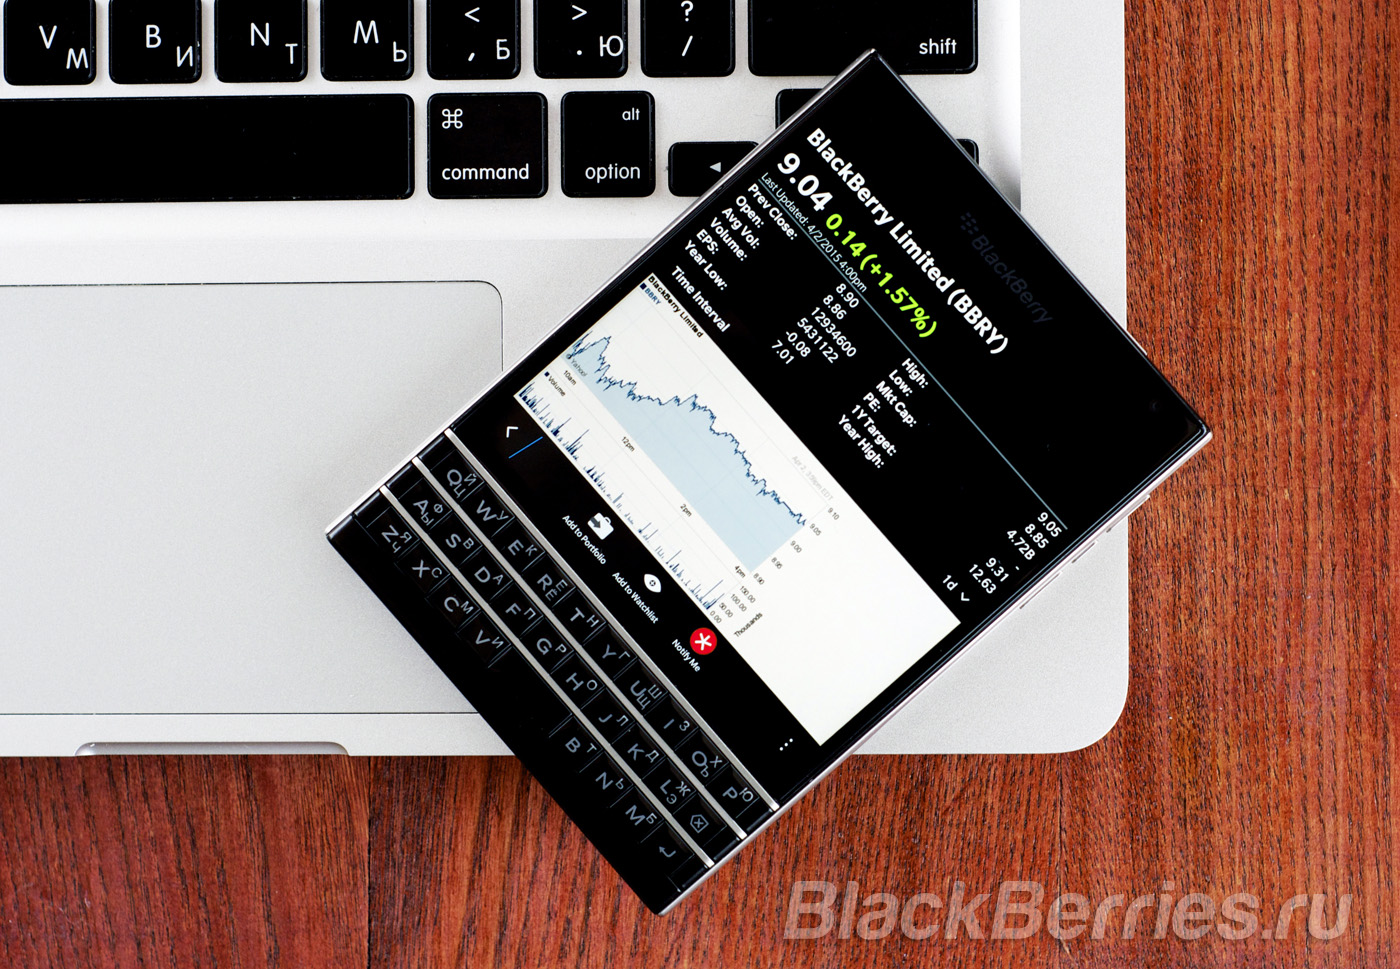 BlackBerry-Stock